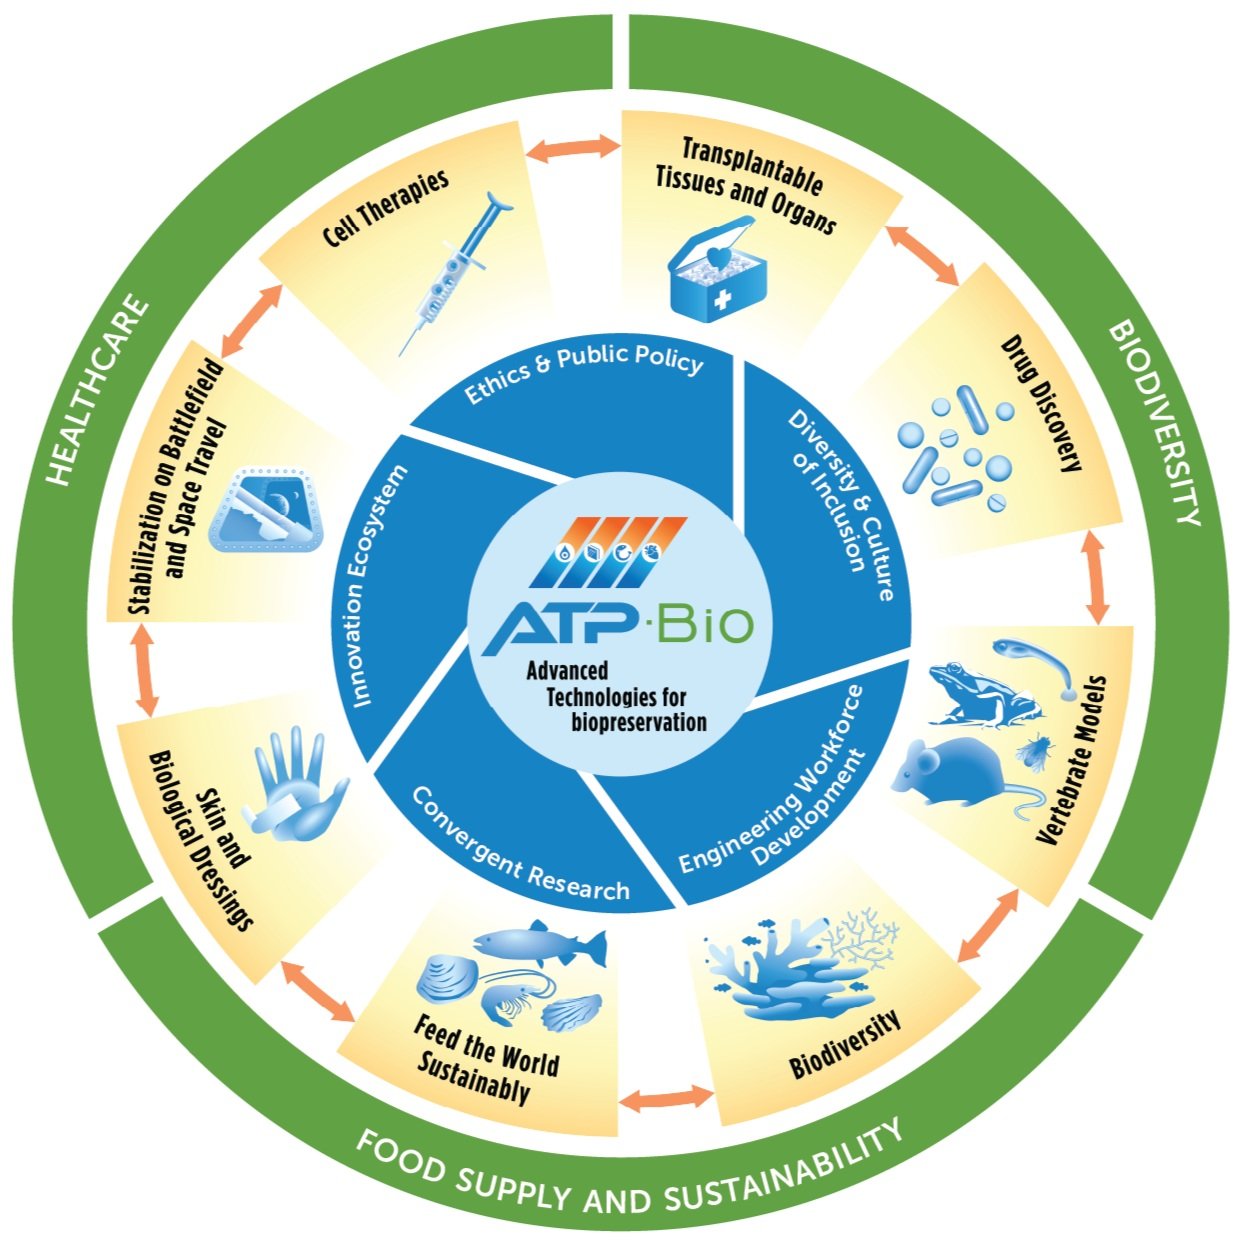 ATP-Bio